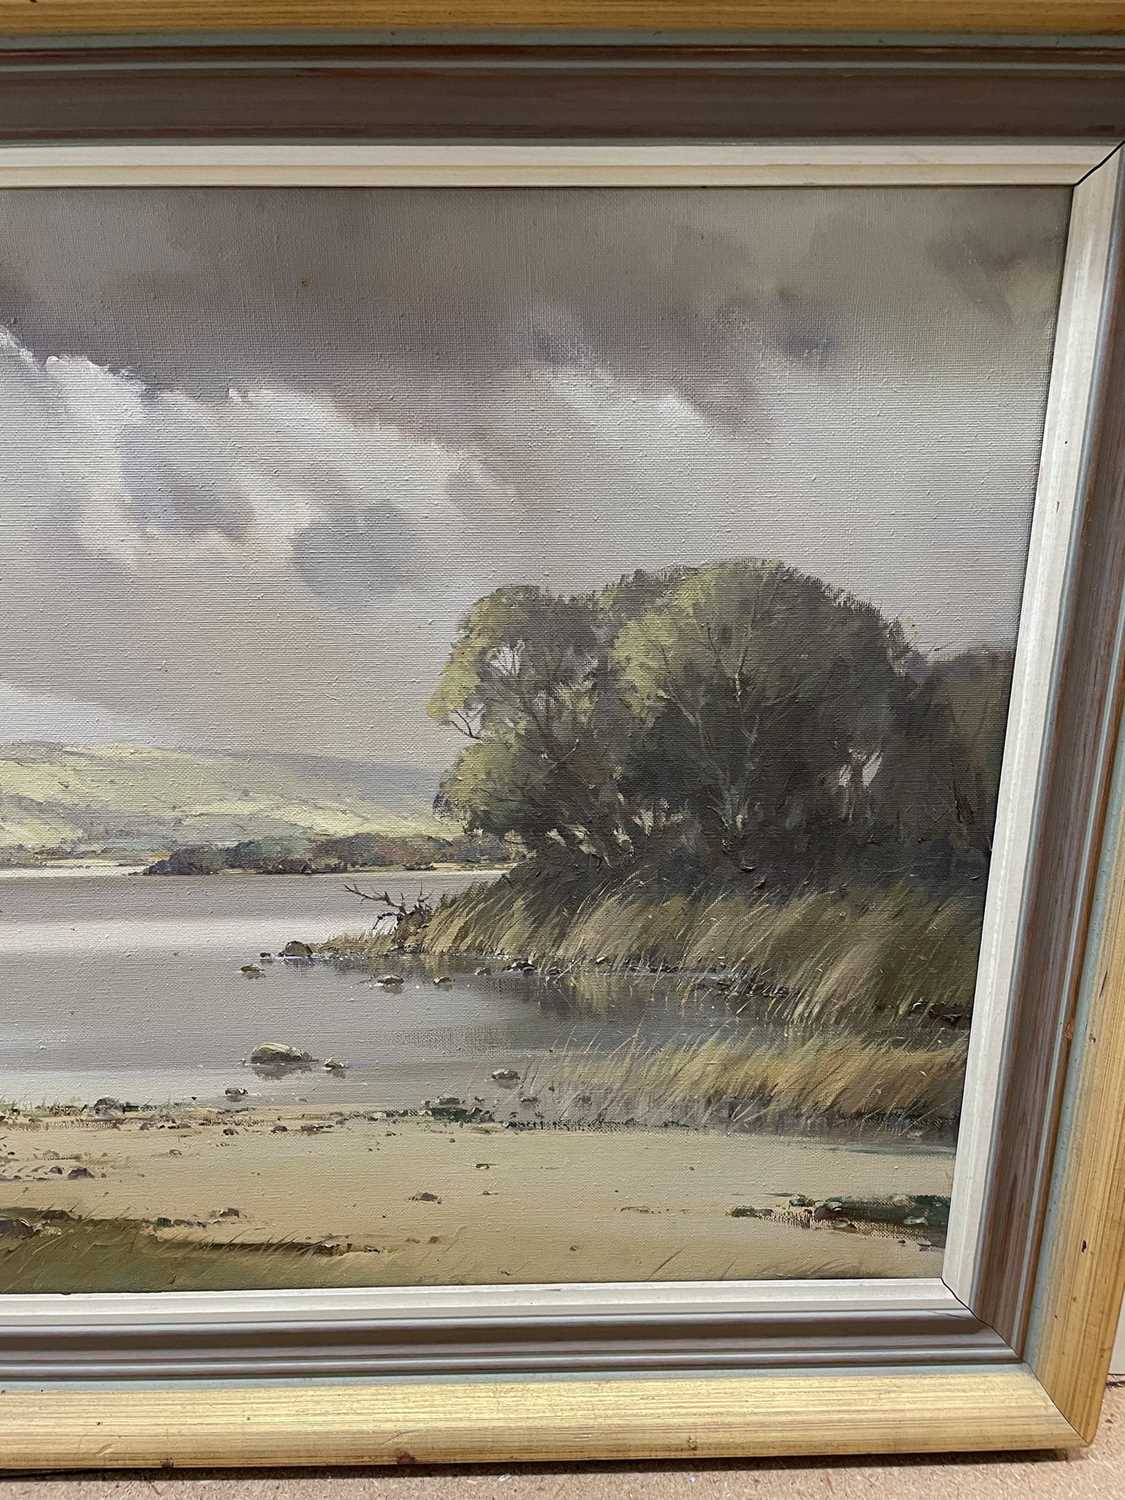 Arthur Wells, 20th century, oil on canvas - Irish Loch, signed framed - Image 5 of 7